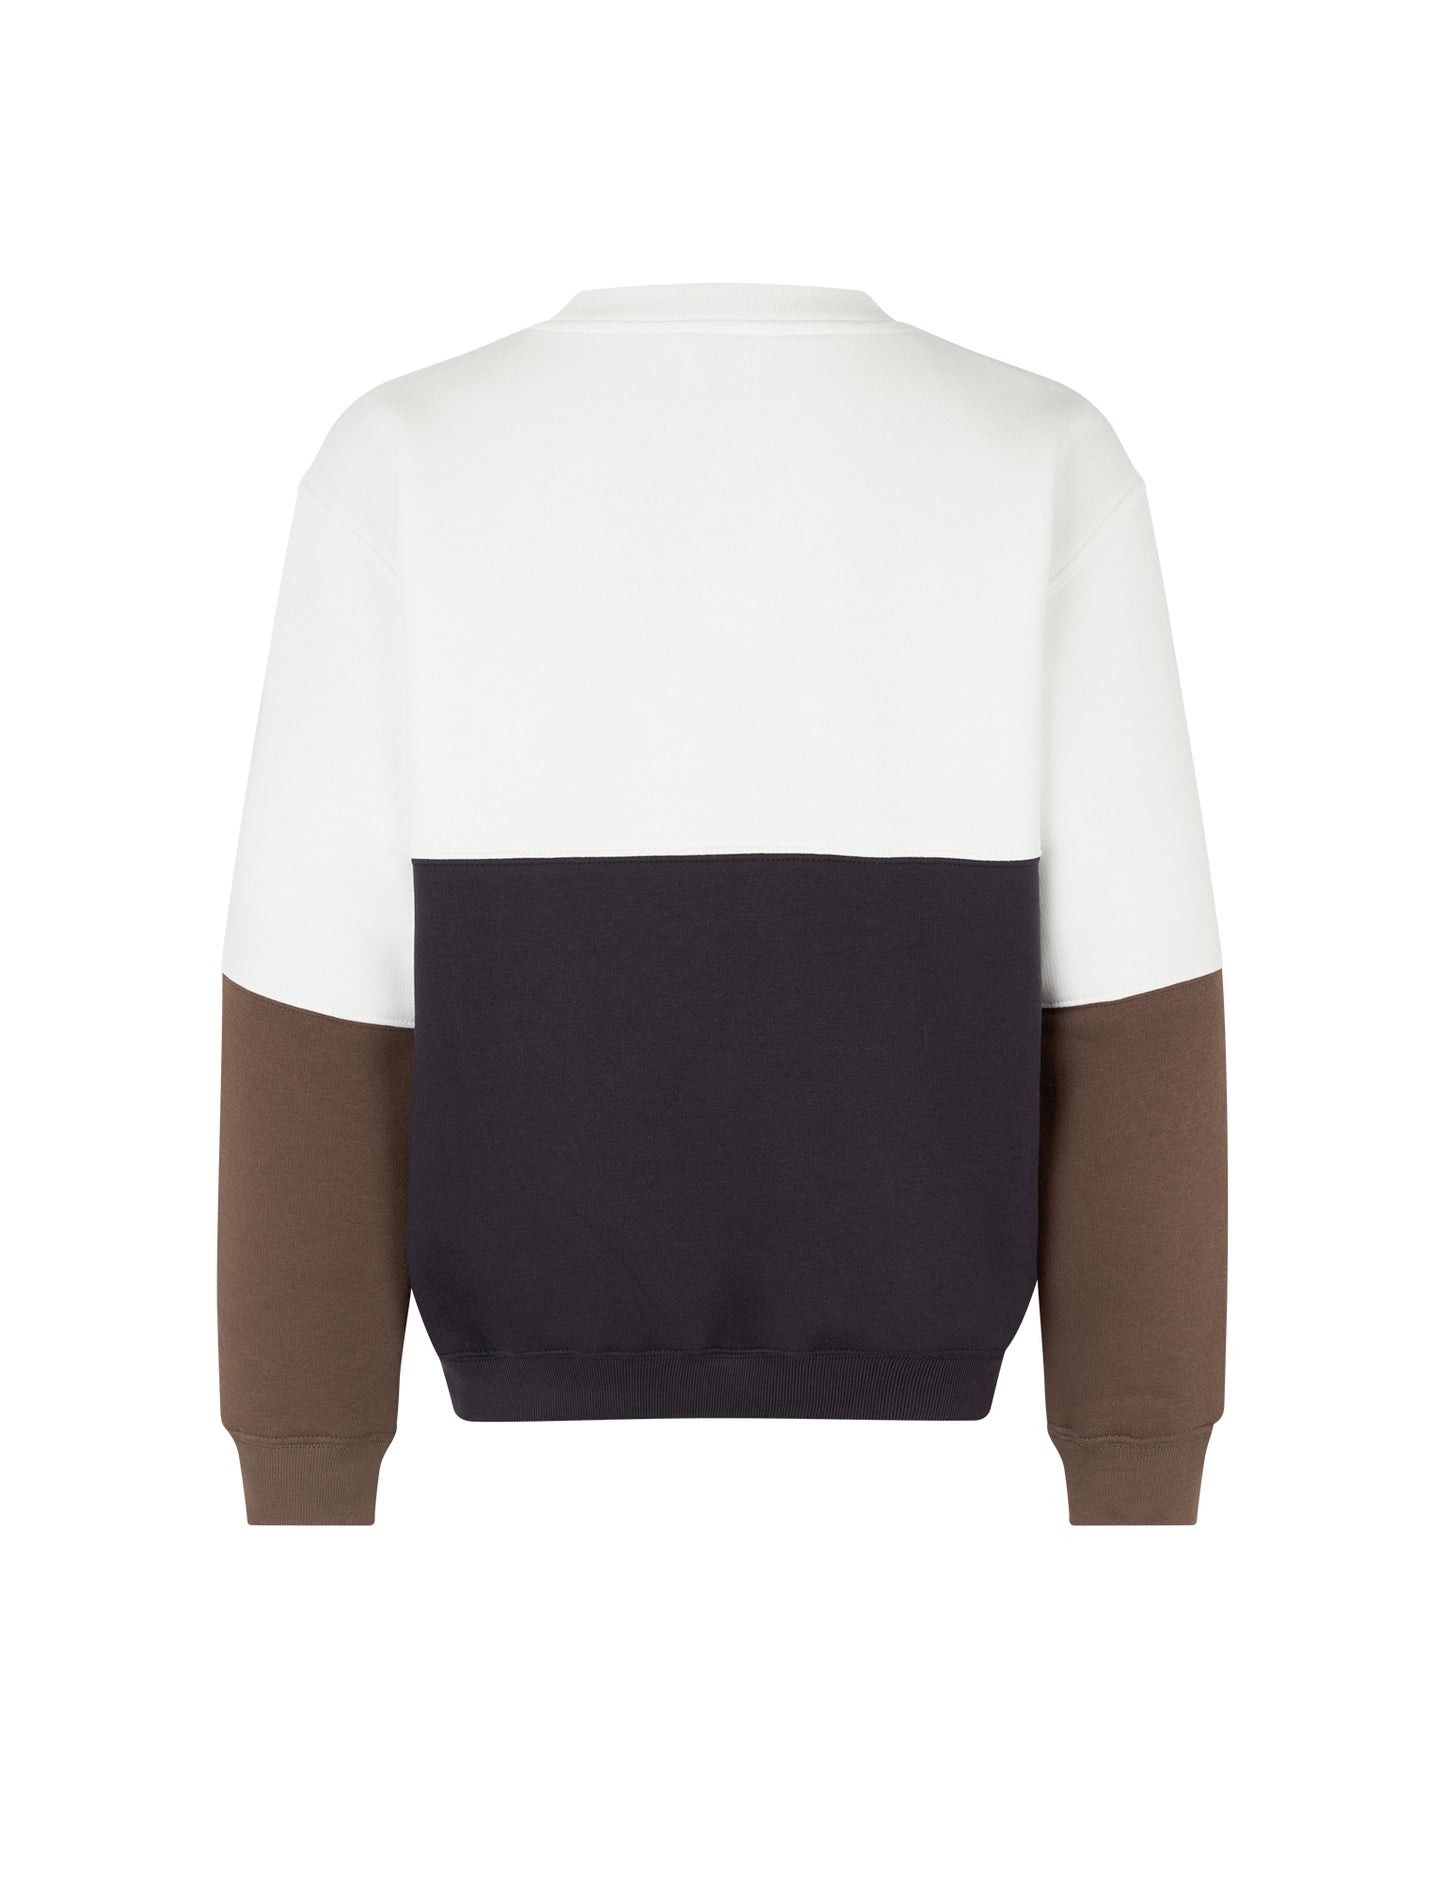 Standard Sonar Block Sweatshirt, Deep Well/Marshmallow/Cup